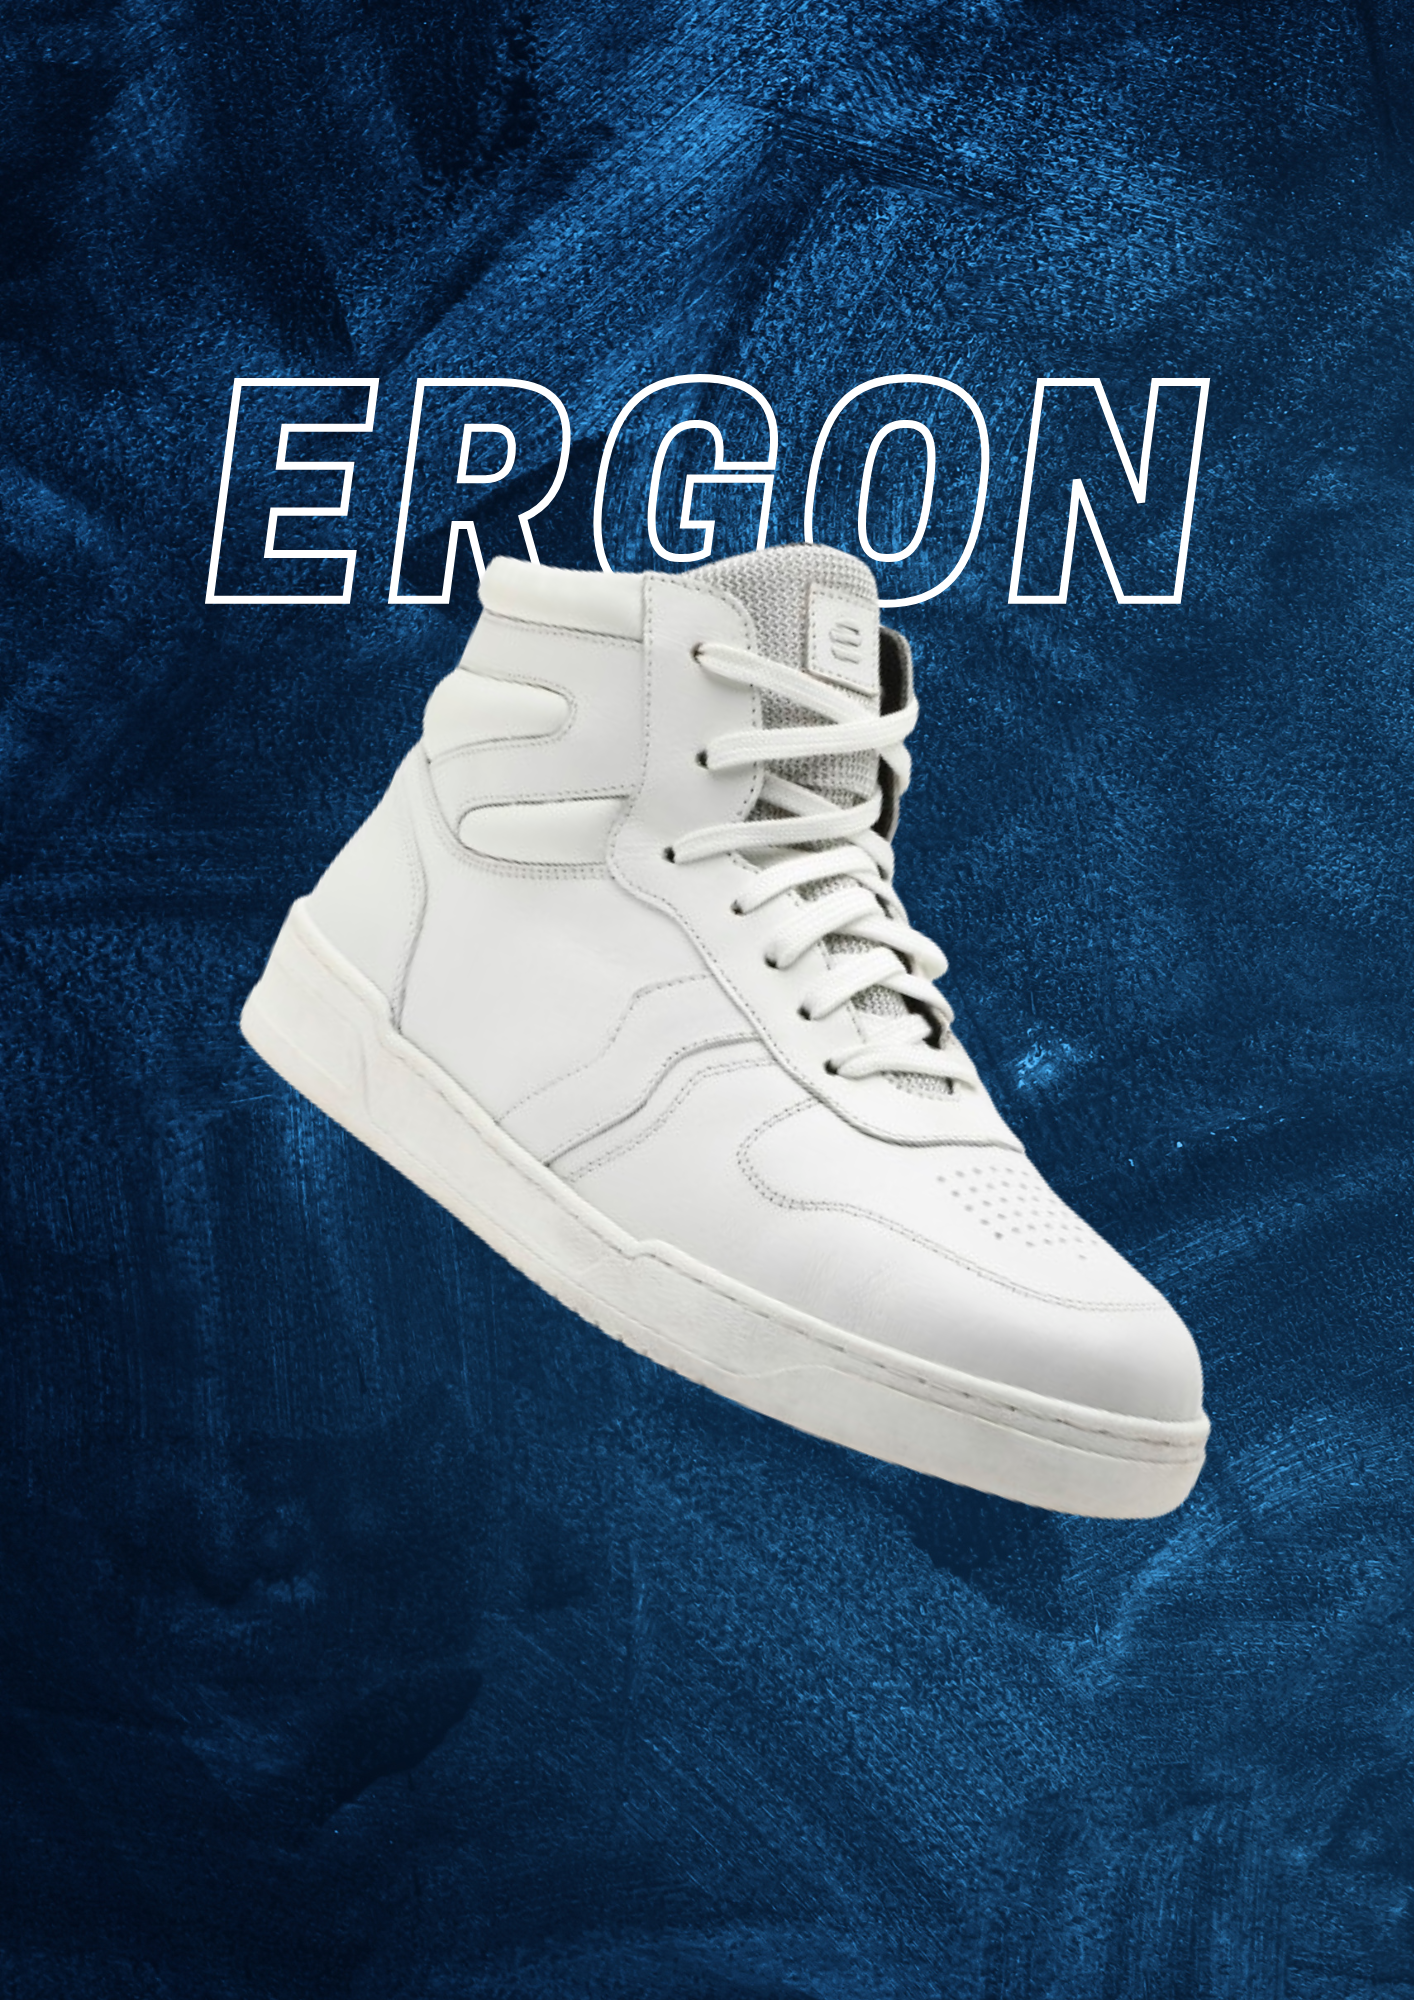 ERGON_59bfc3b0-0363-471b-9a32-50bac9a380e8.png